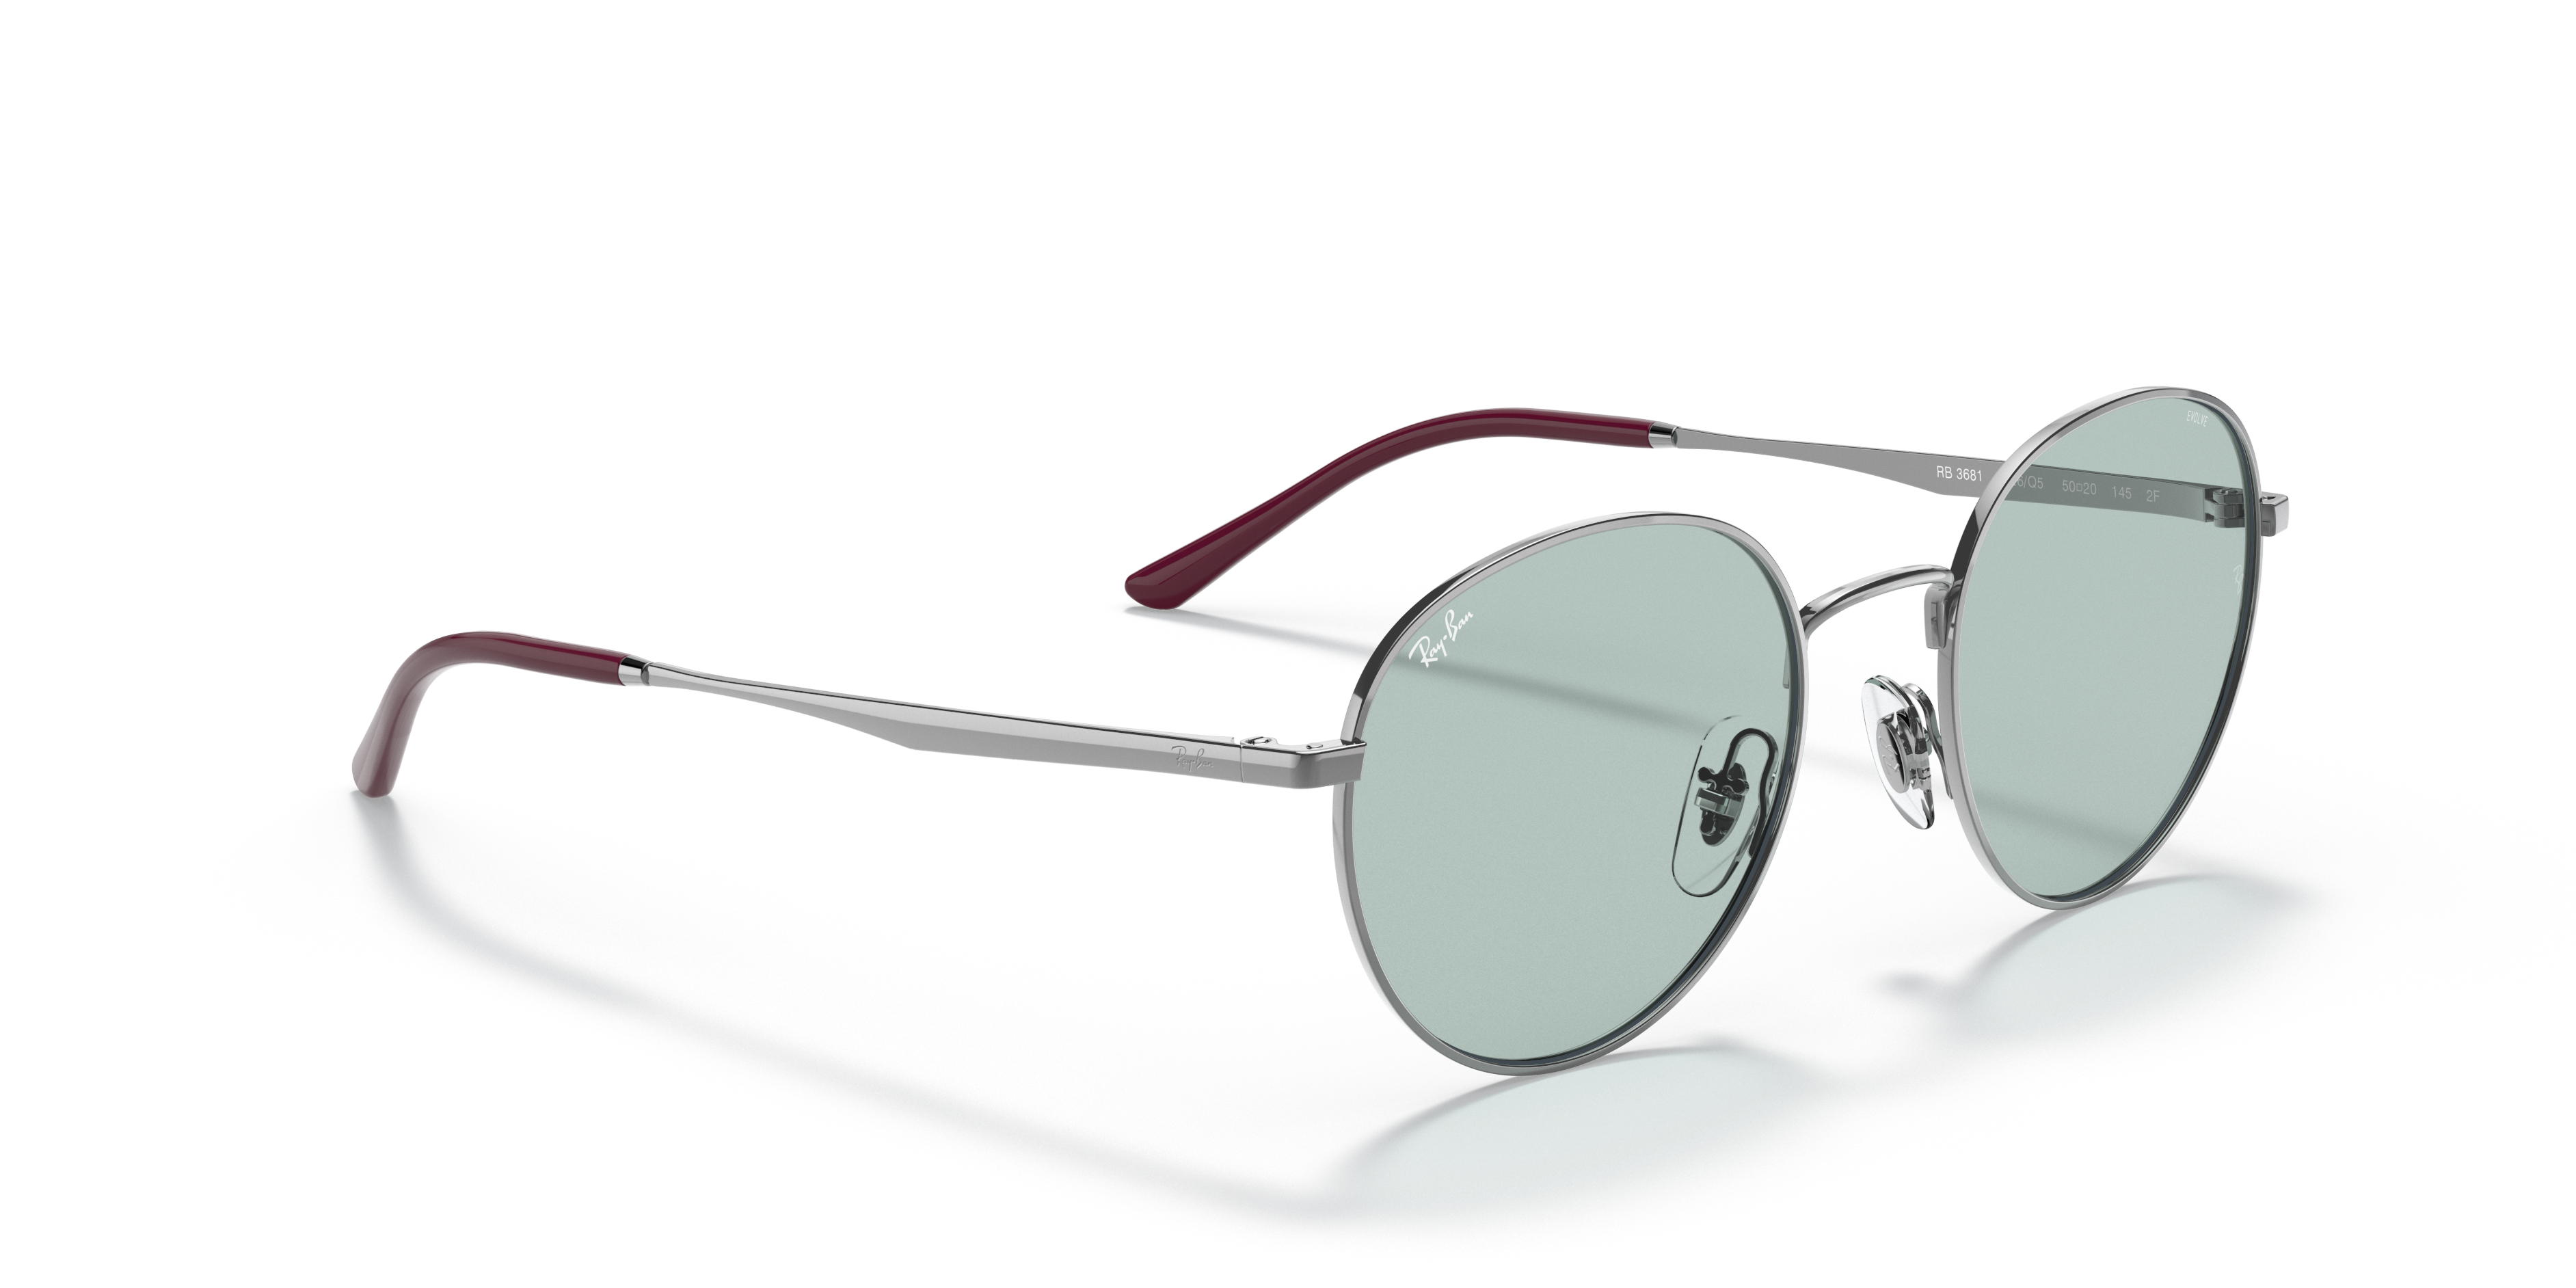 Rb3681 Evolve Sunglasses in Gunmetal and Green Photochromic | Ray-Ban®